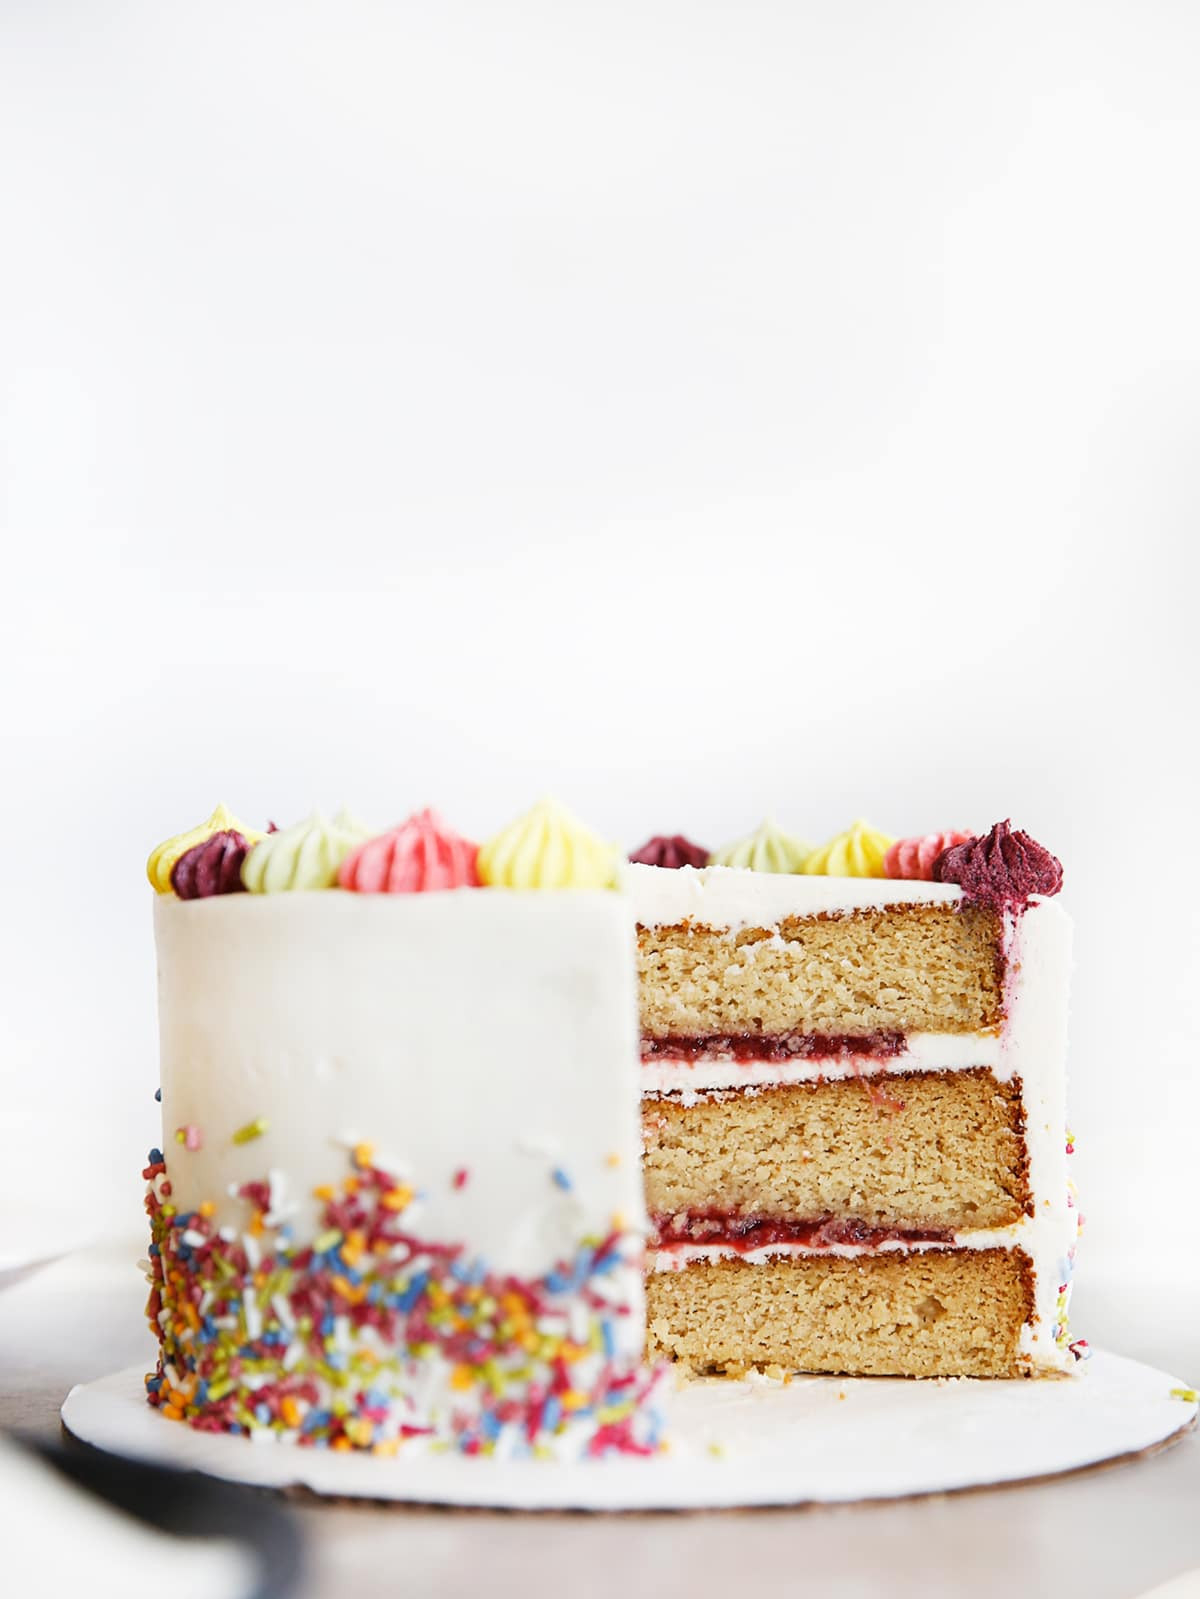 Best ideas about Gluten Free Birthday Cake
. Save or Pin The BEST Gluten Free Layer Birthday Cake Lexi s Clean Now.